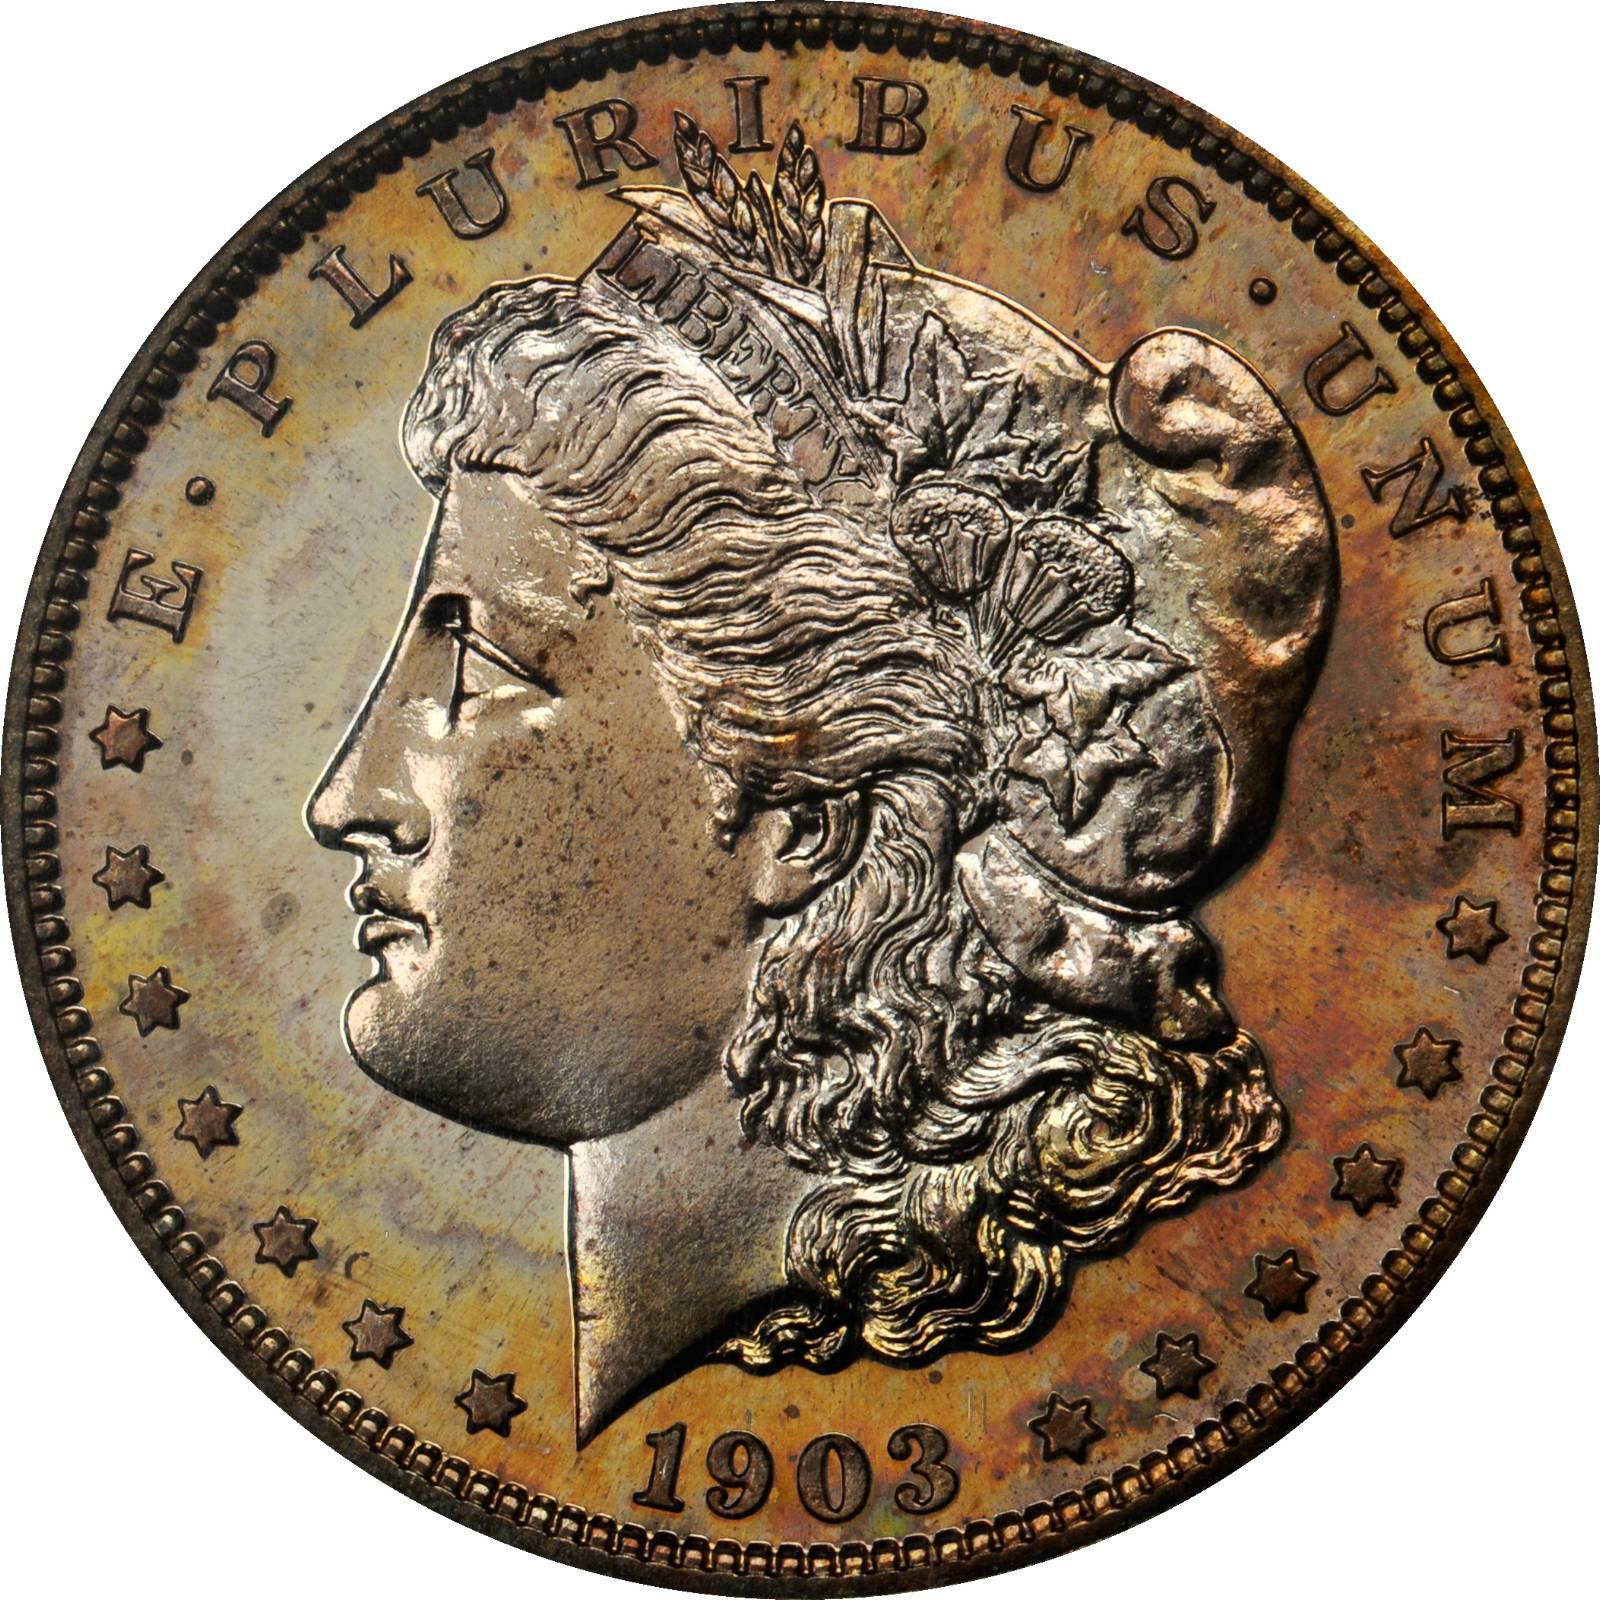 https://coinappraiser.com/wp-content/uploads/2016/08/Morgan-Dollars-1903-Obverse.jpeg